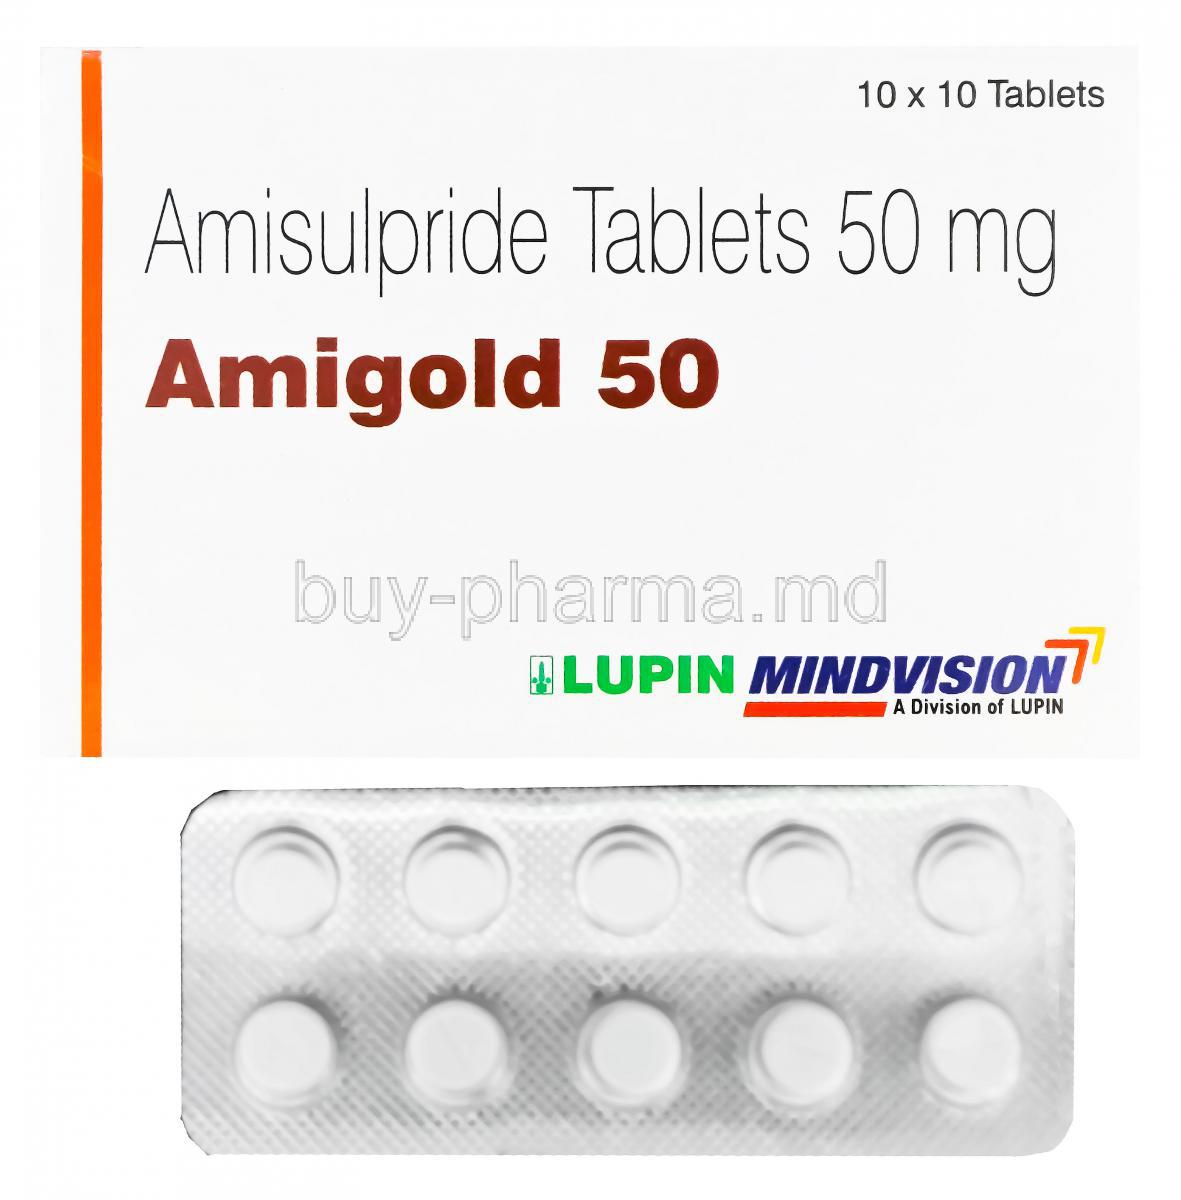 Amigold 50, Generic Solian, Amisulpride 50mg